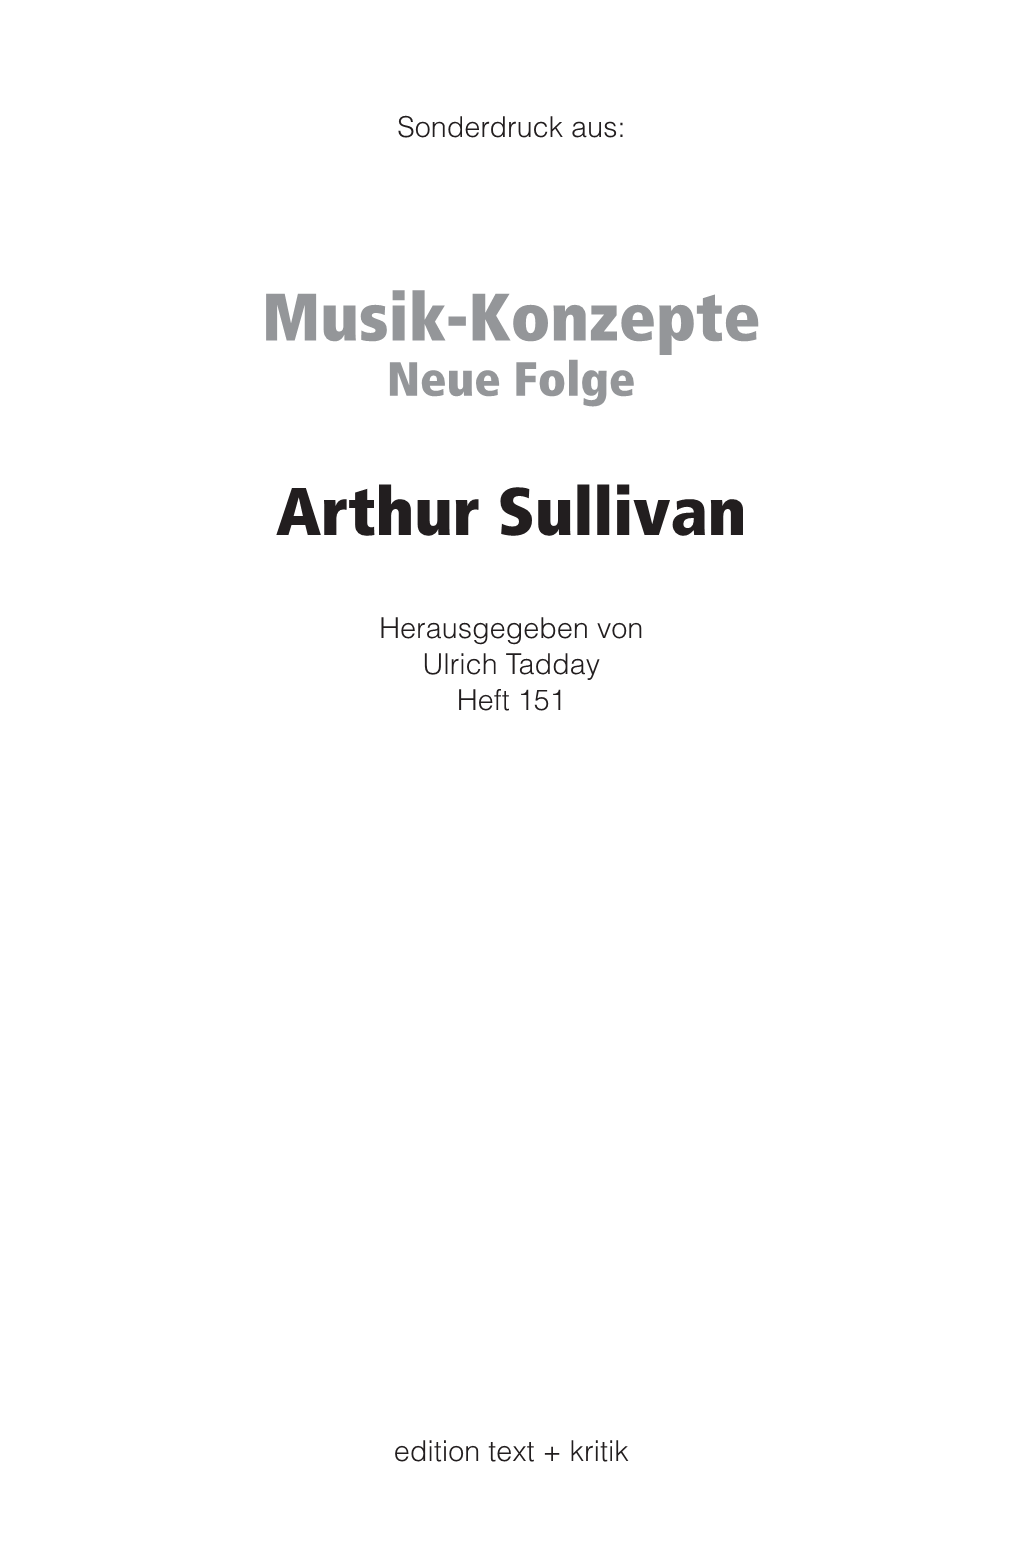 Musik-Konzepte Arthur Sullivan